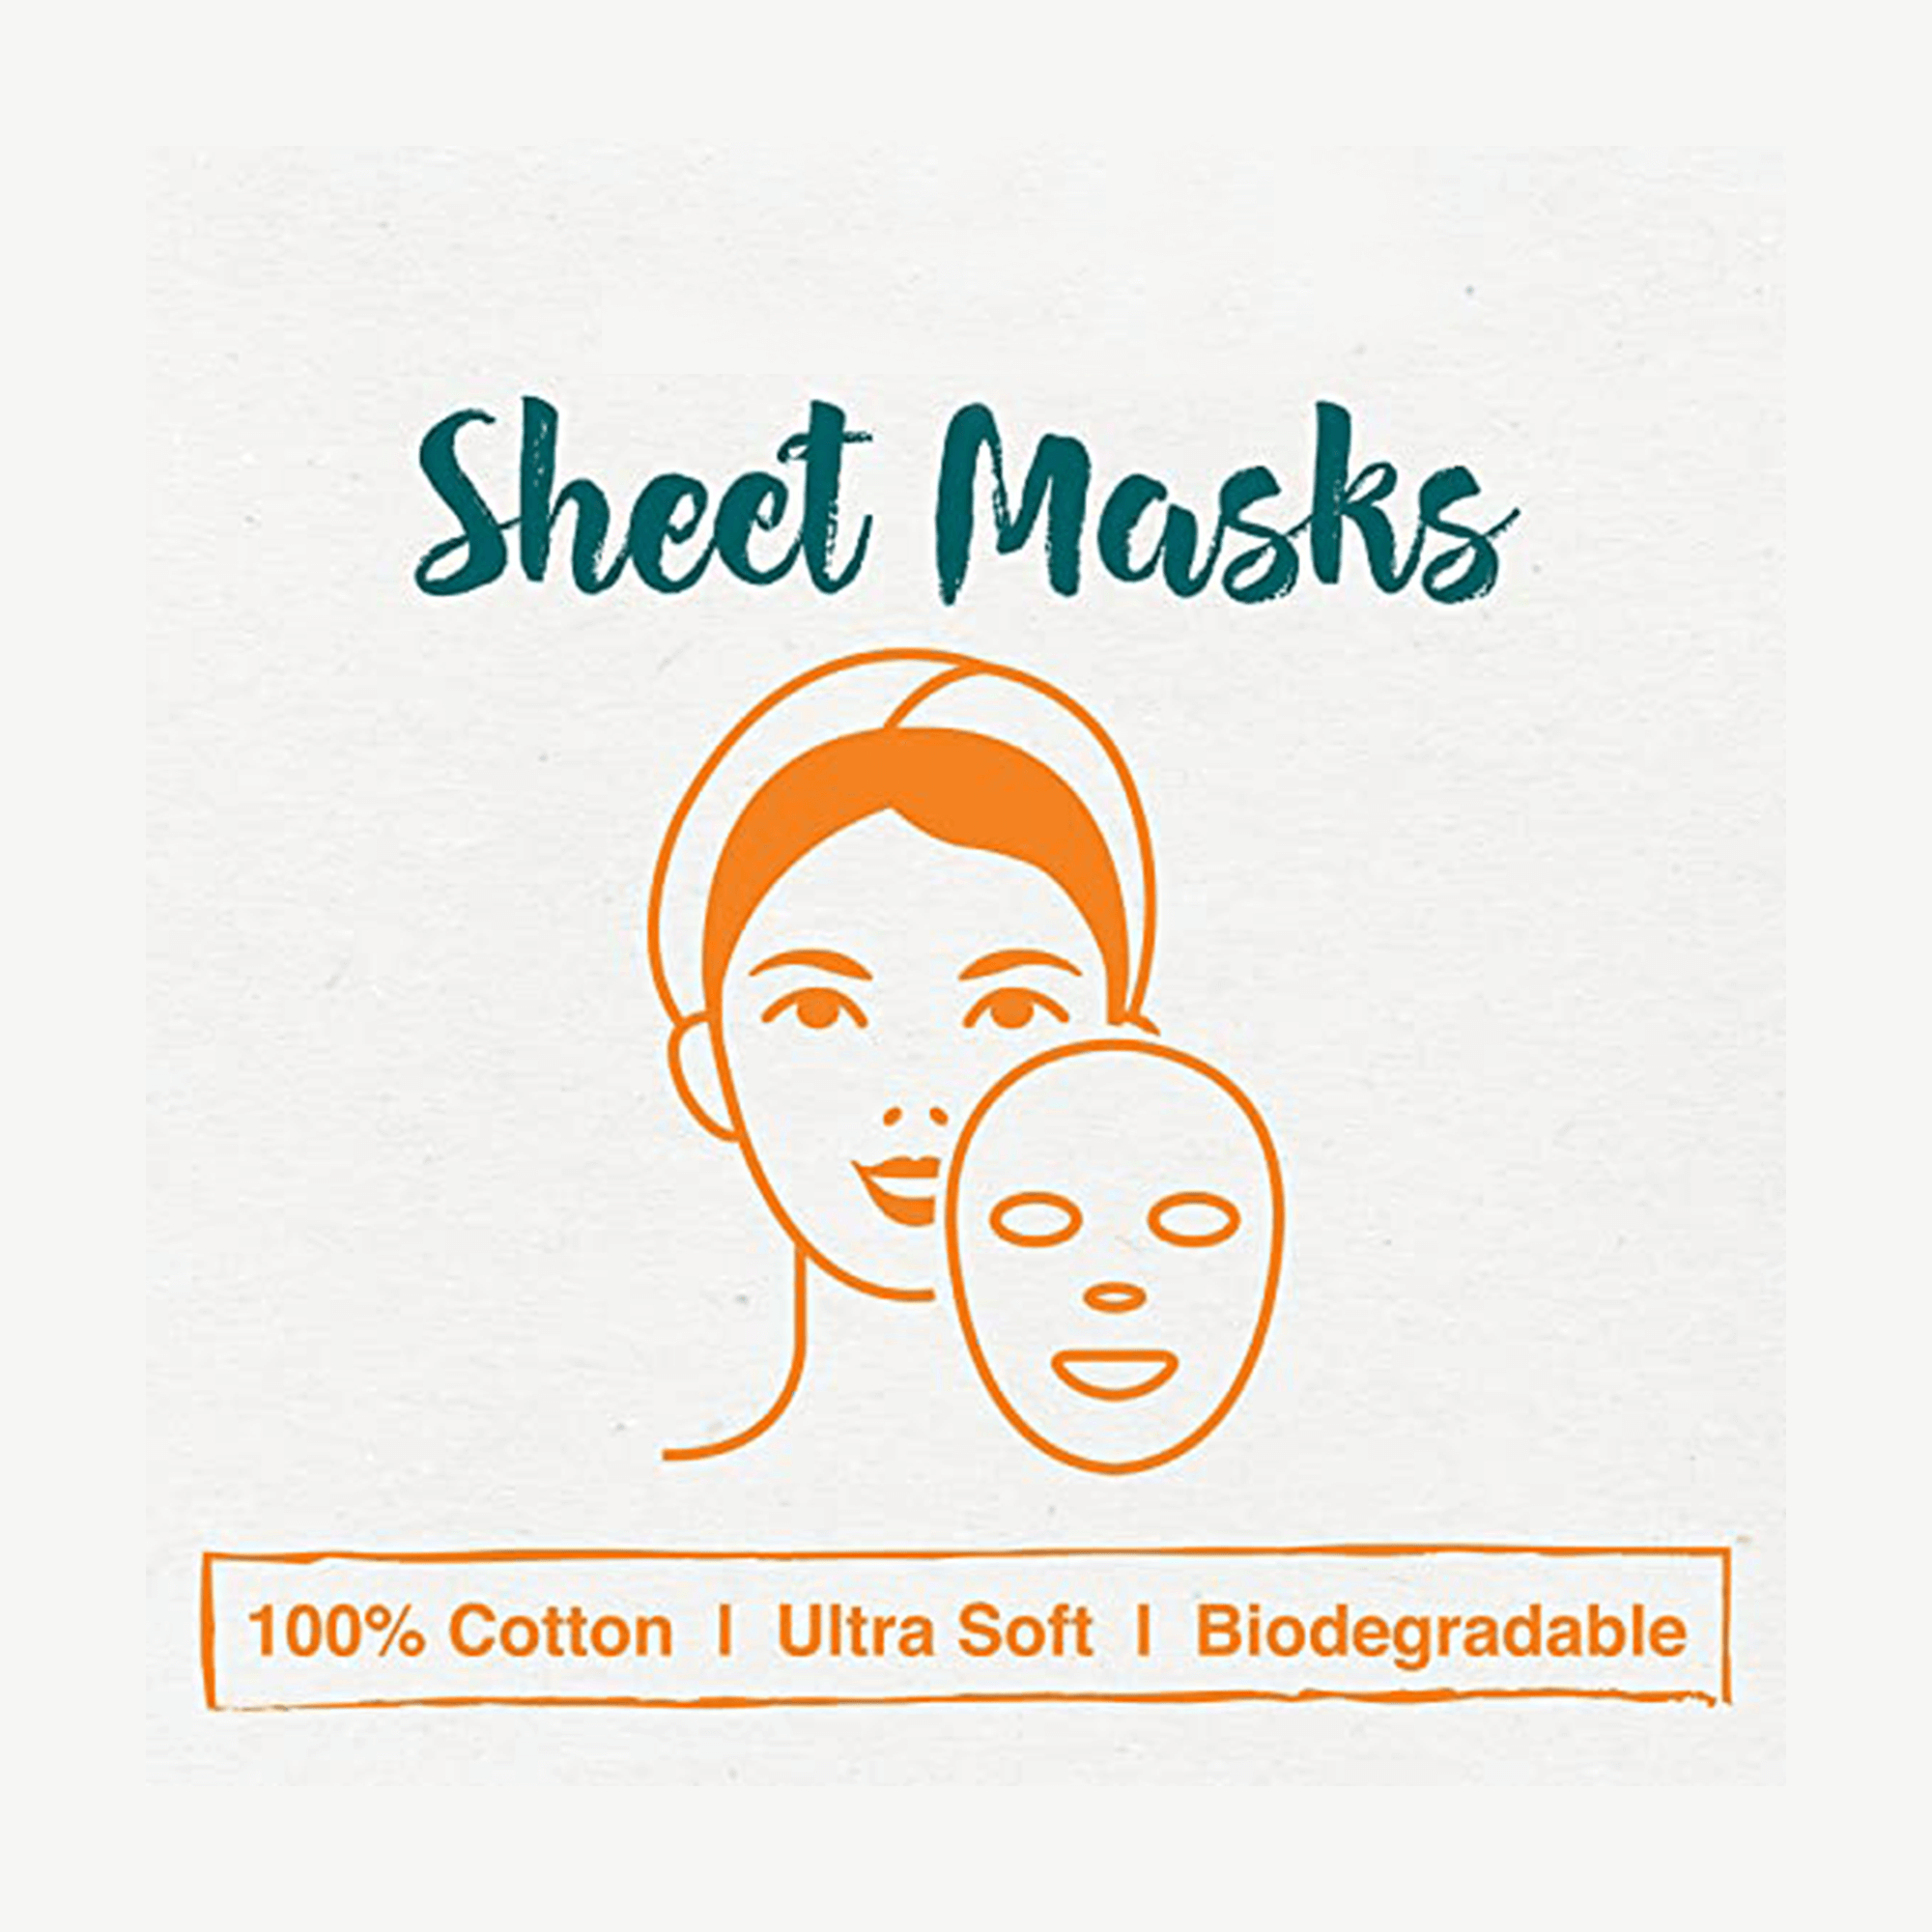 Himalaya Sheet Masks - 100% Cotton & Biodegradable